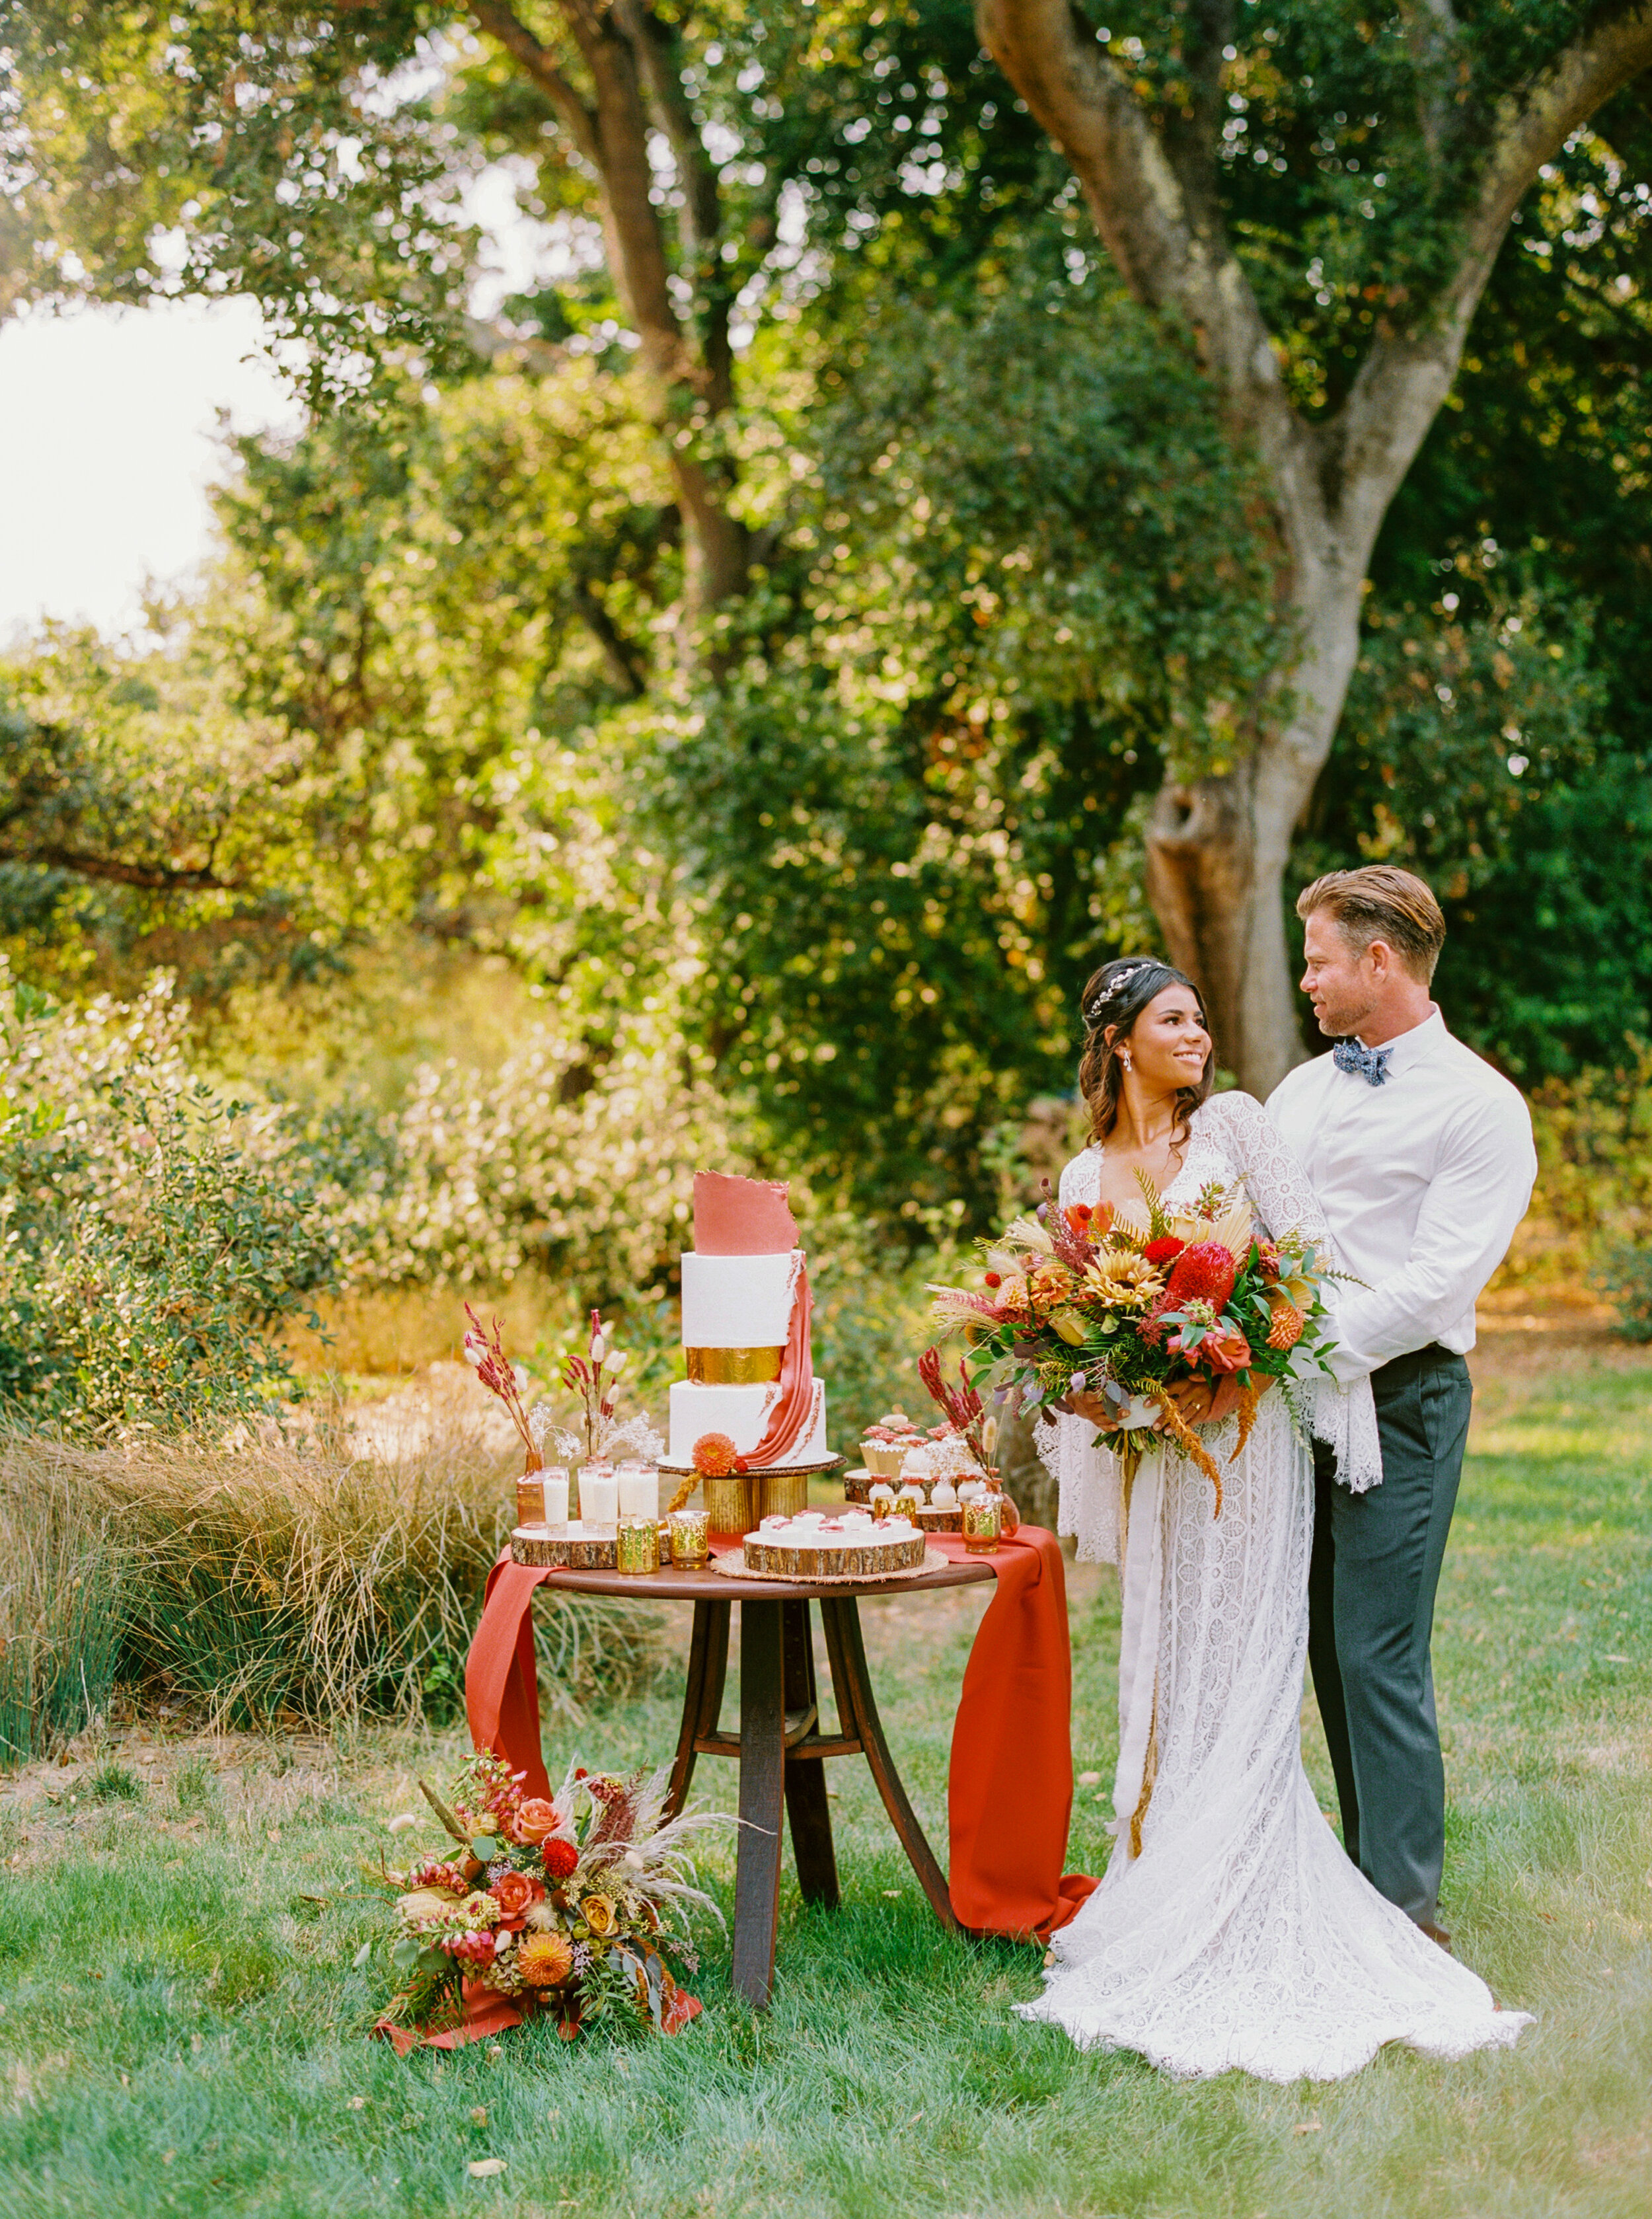 Sarahi Hadden - An Earthy Summer Boho Inspired Wedding with Sunset Hues at Gardener Ranch-16.jpg